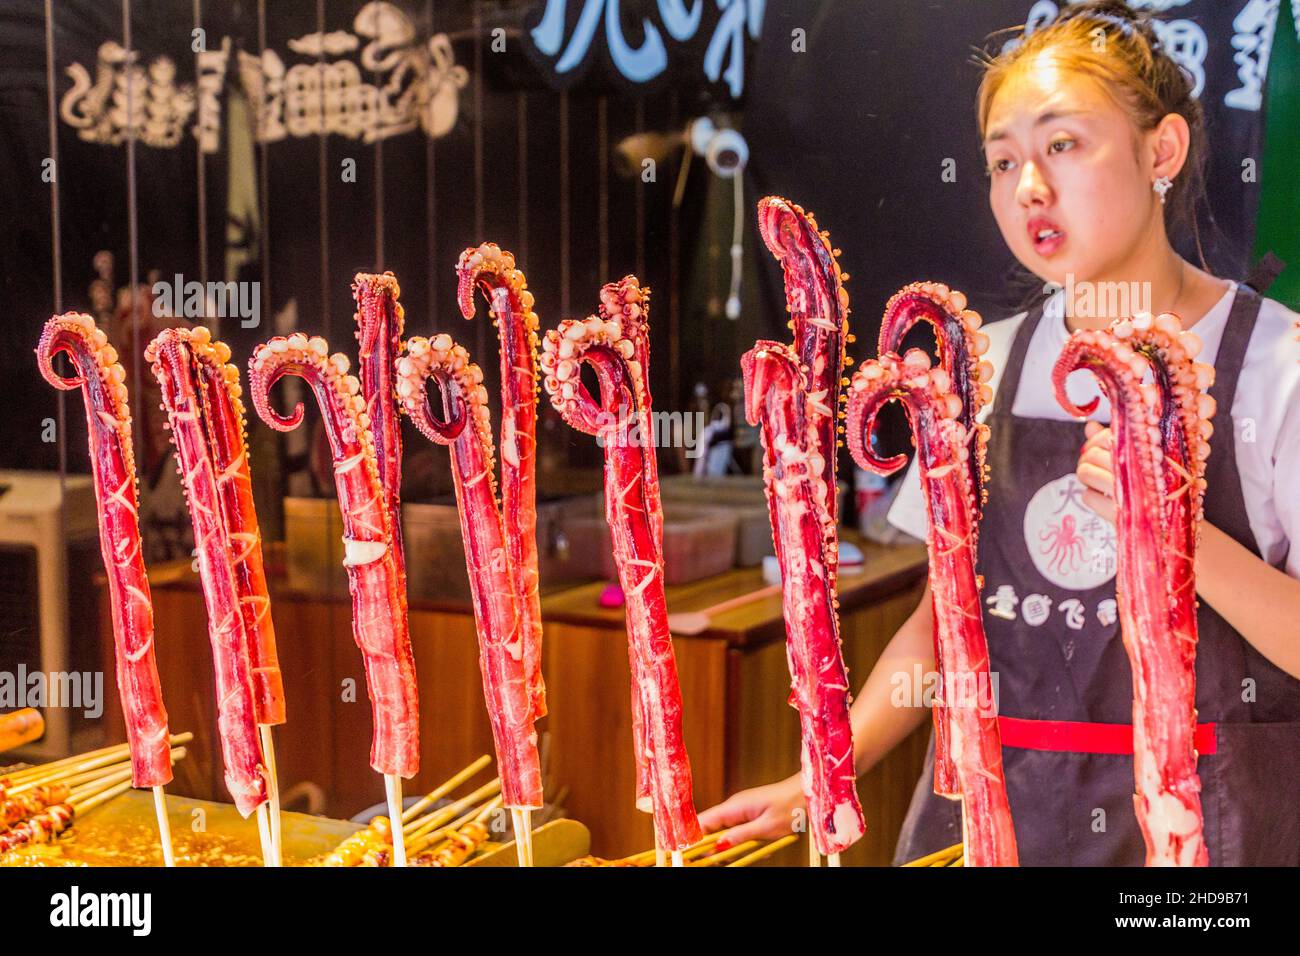 CHONGQING, CHINA - 17. AUGUST 2018: Tintenfisch-Spieße Stand in der alten Stadt Ciqikou, China Stockfoto